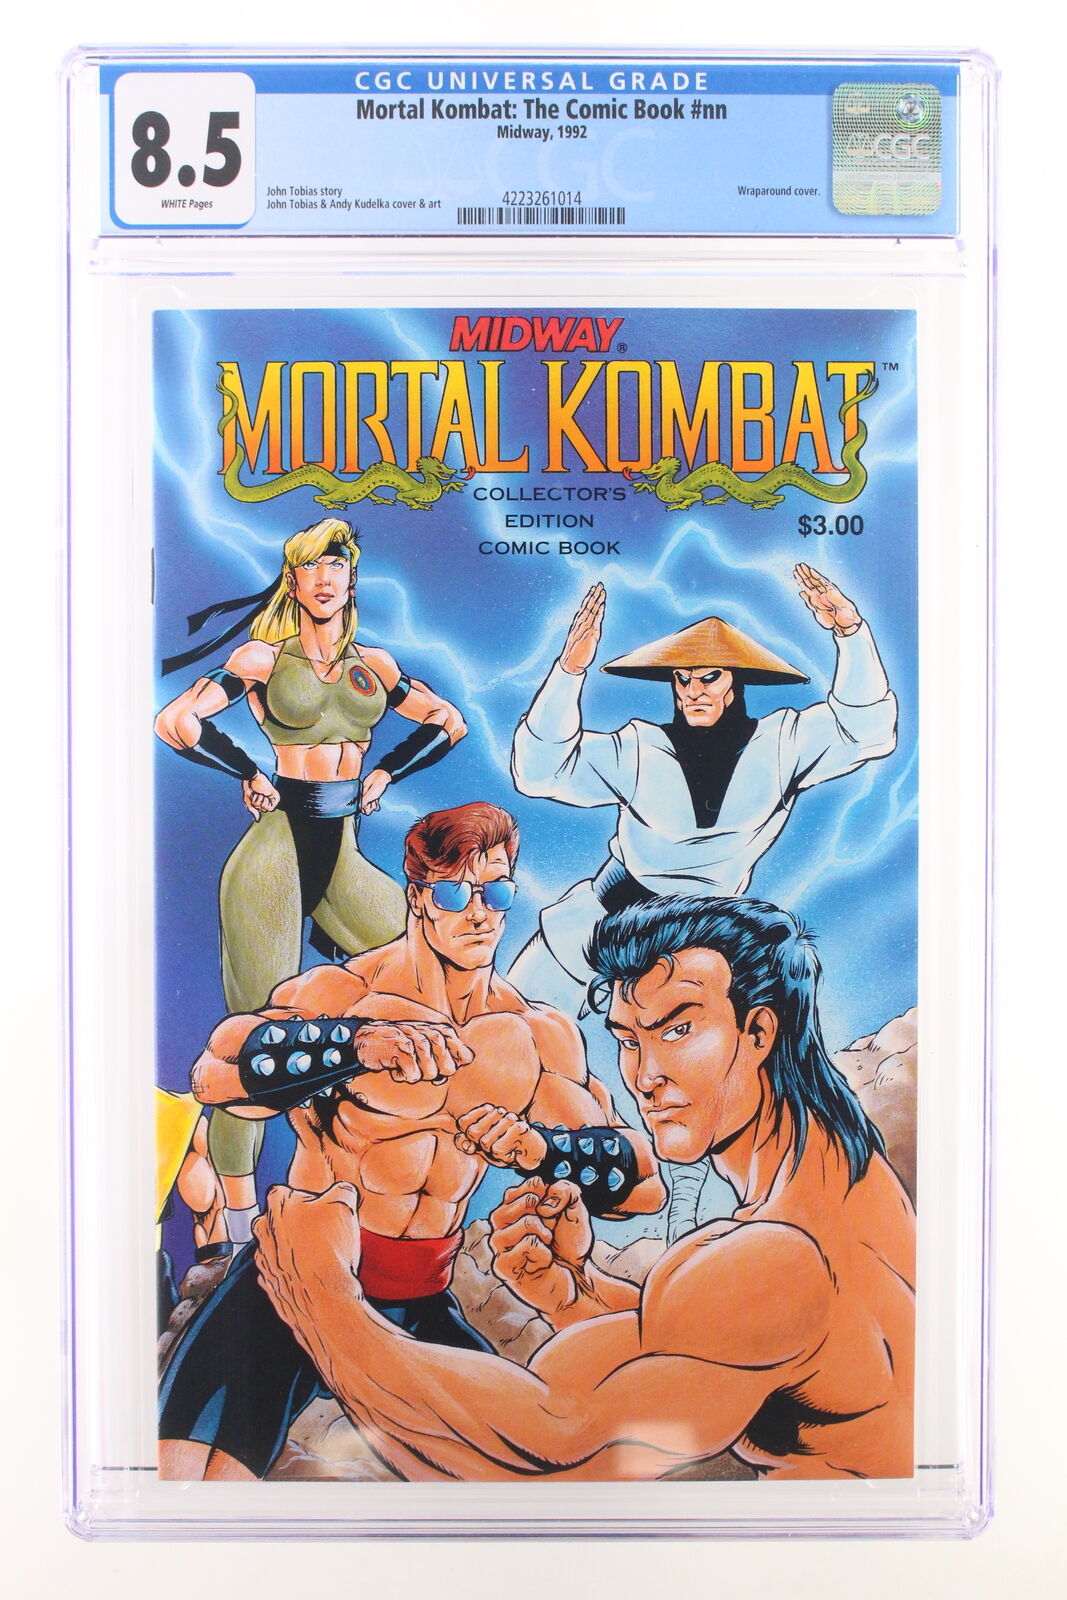 Mortal Kombat: The Comic Book #nn - Midway 1992 CGC 8.5 Wraparound cover.